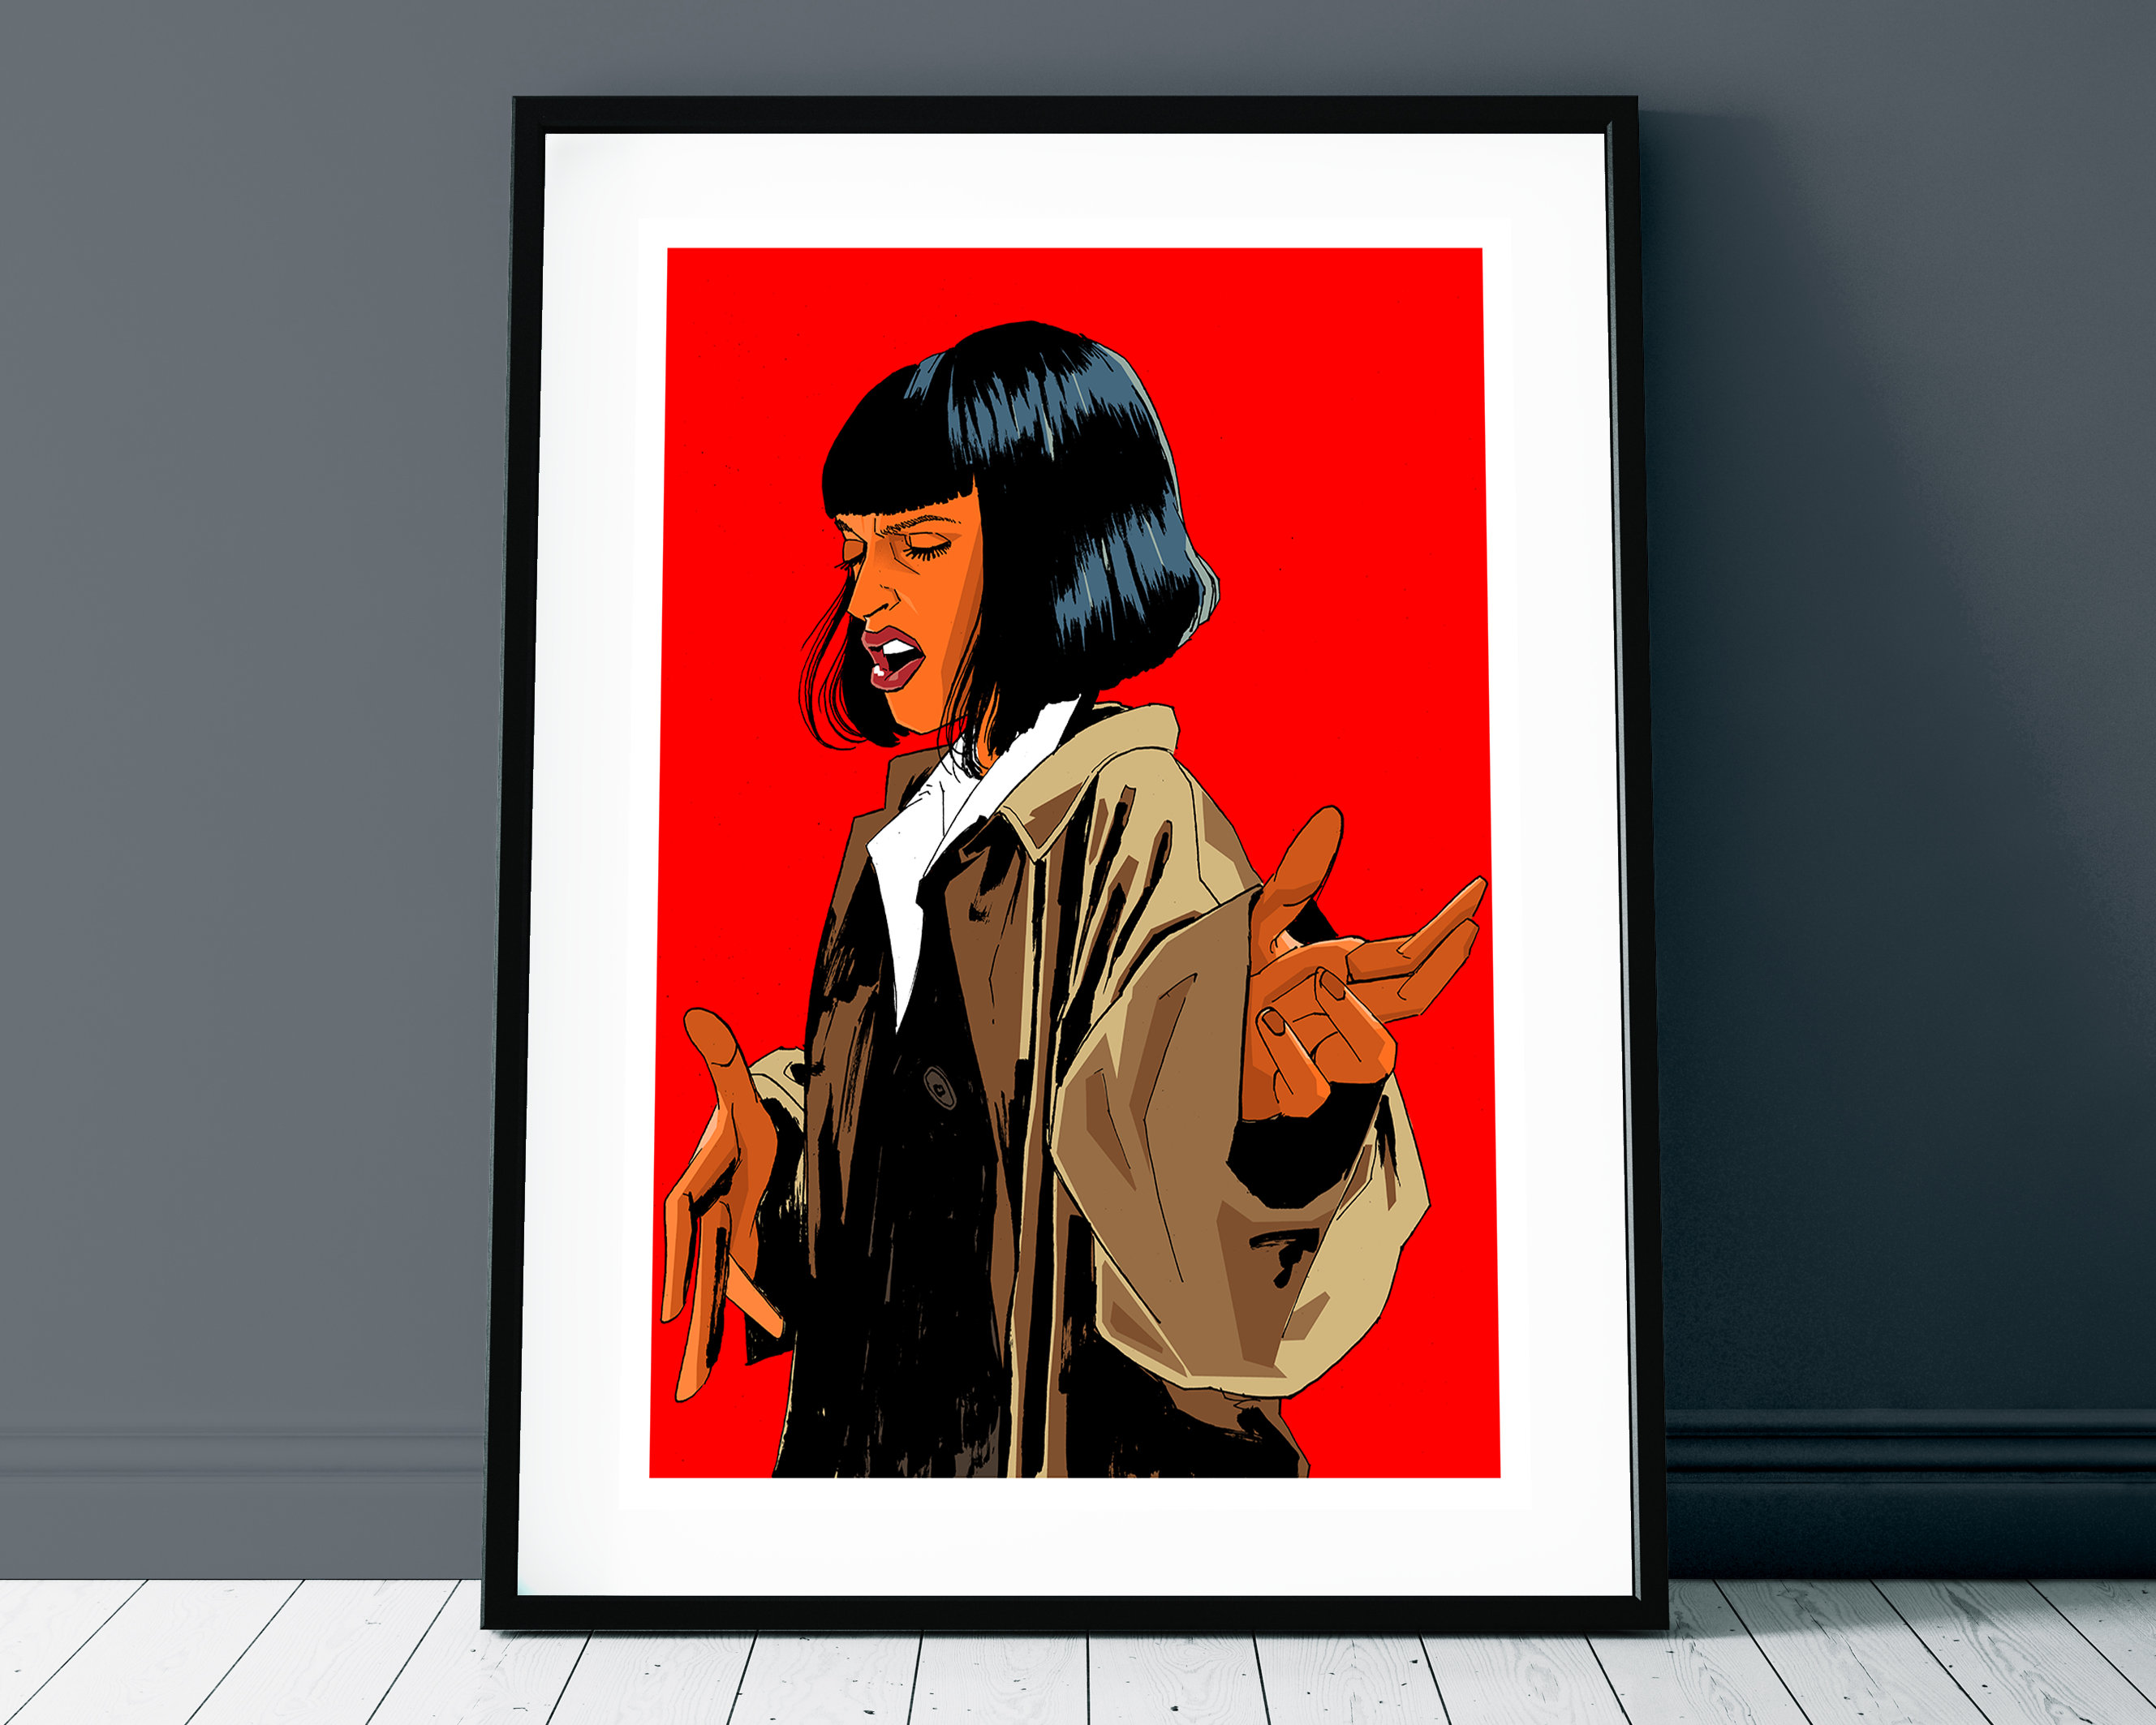 Pulp Fiction Mrs. Mia Wallace Uma Thurman Poster 24x36 – PosterAmerica